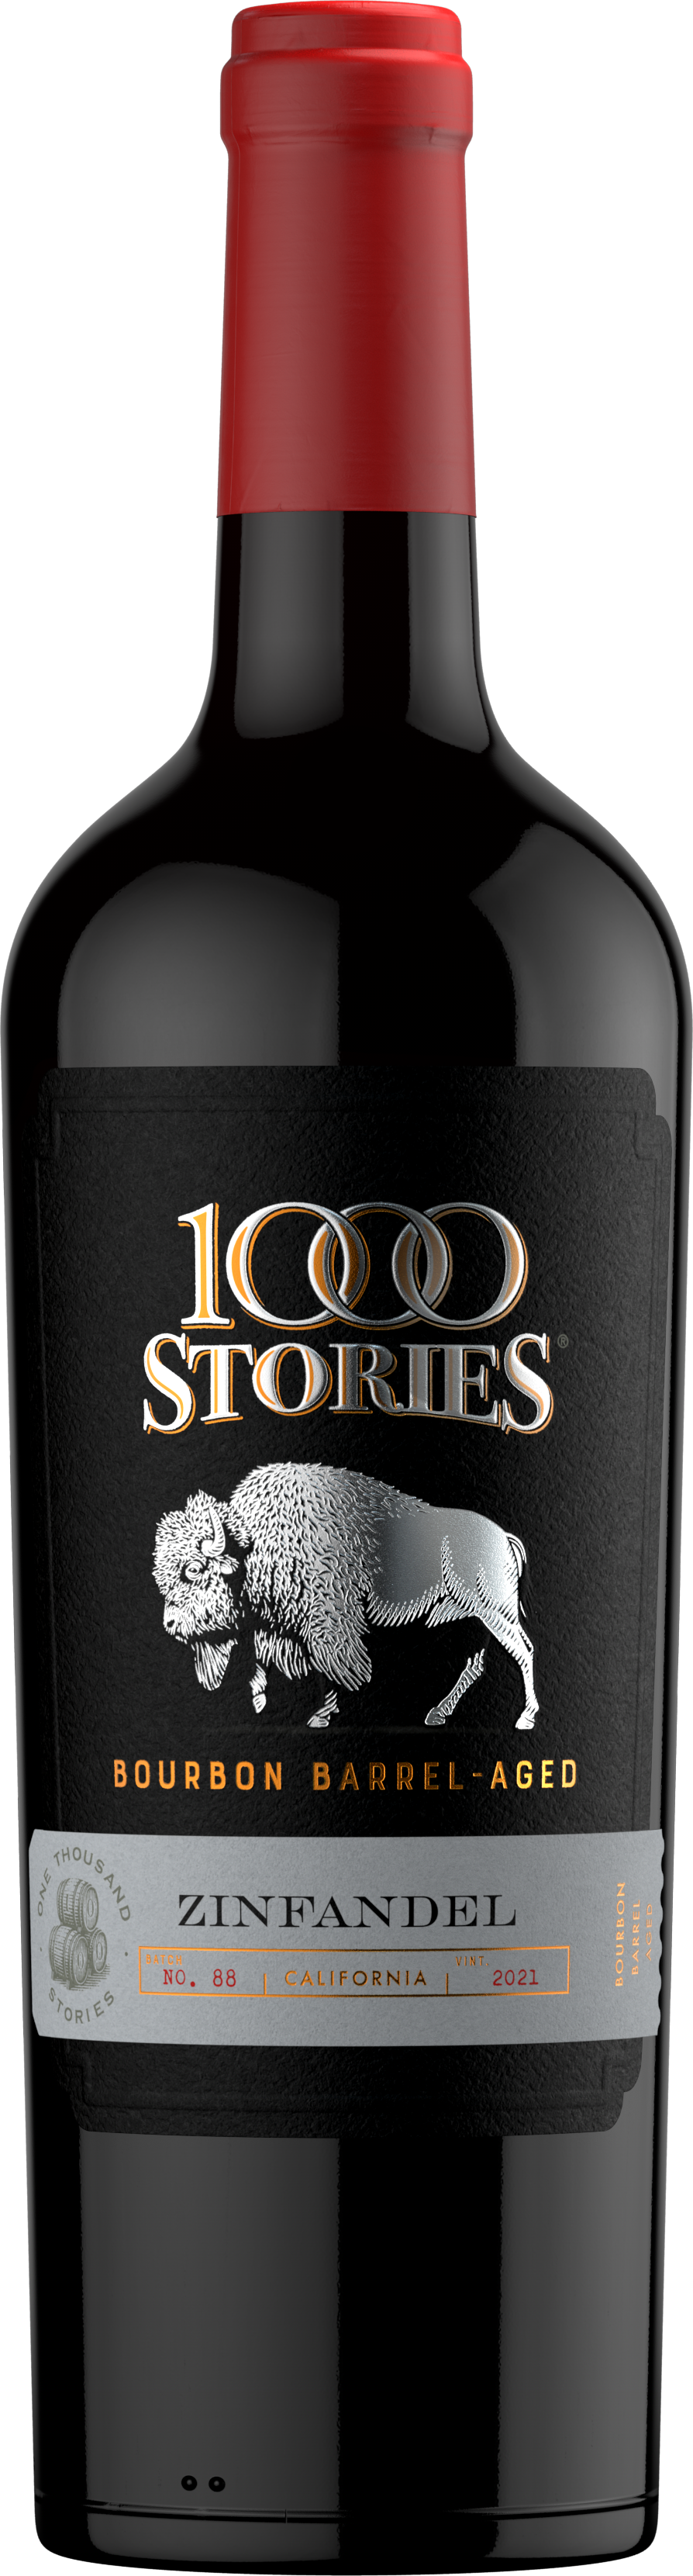 1000 Stories Bourbon Barrel Aged Zinfandel California